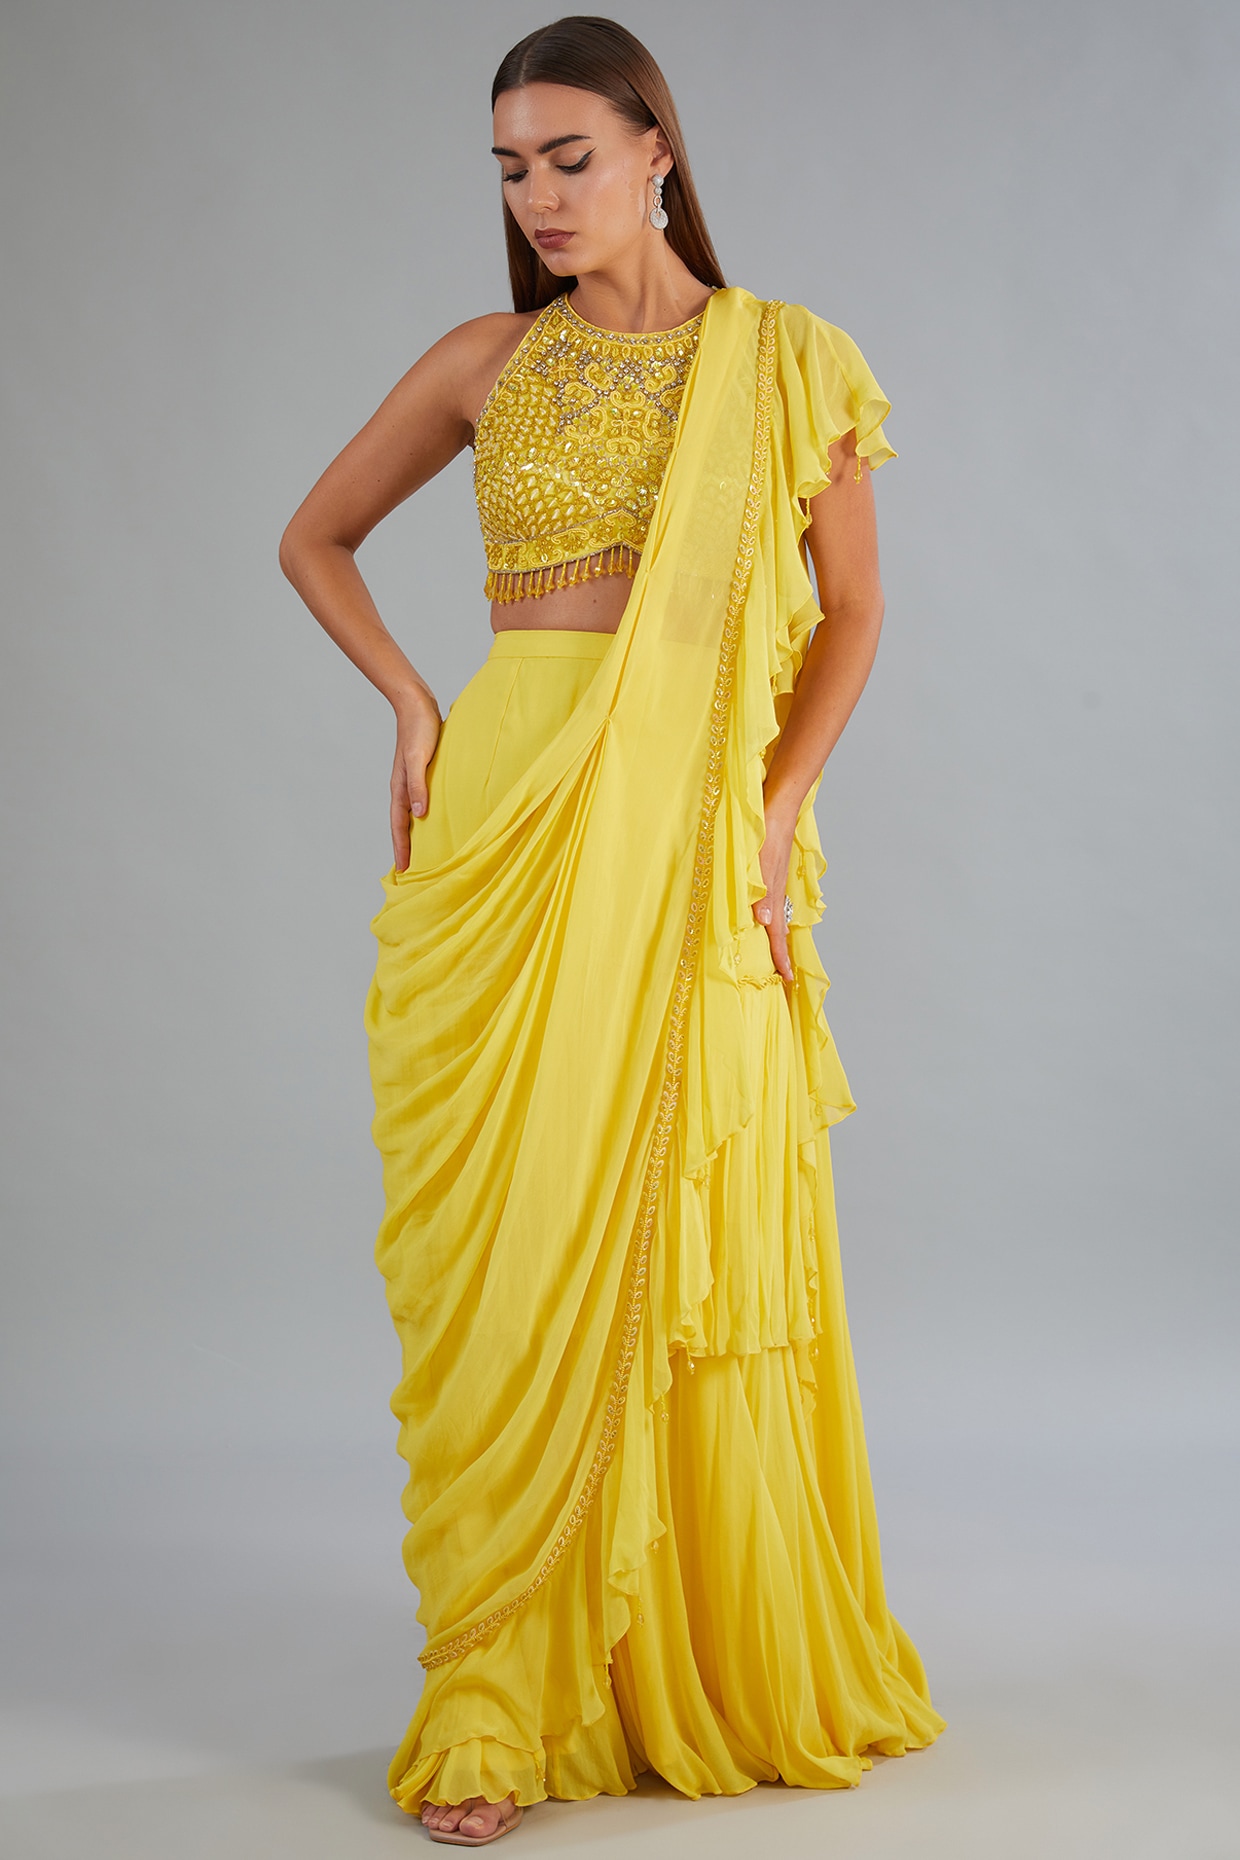 Gotapatti Work Sari Georgette Saree Indian Designer Partywear Lehenga  Bollywood | eBay